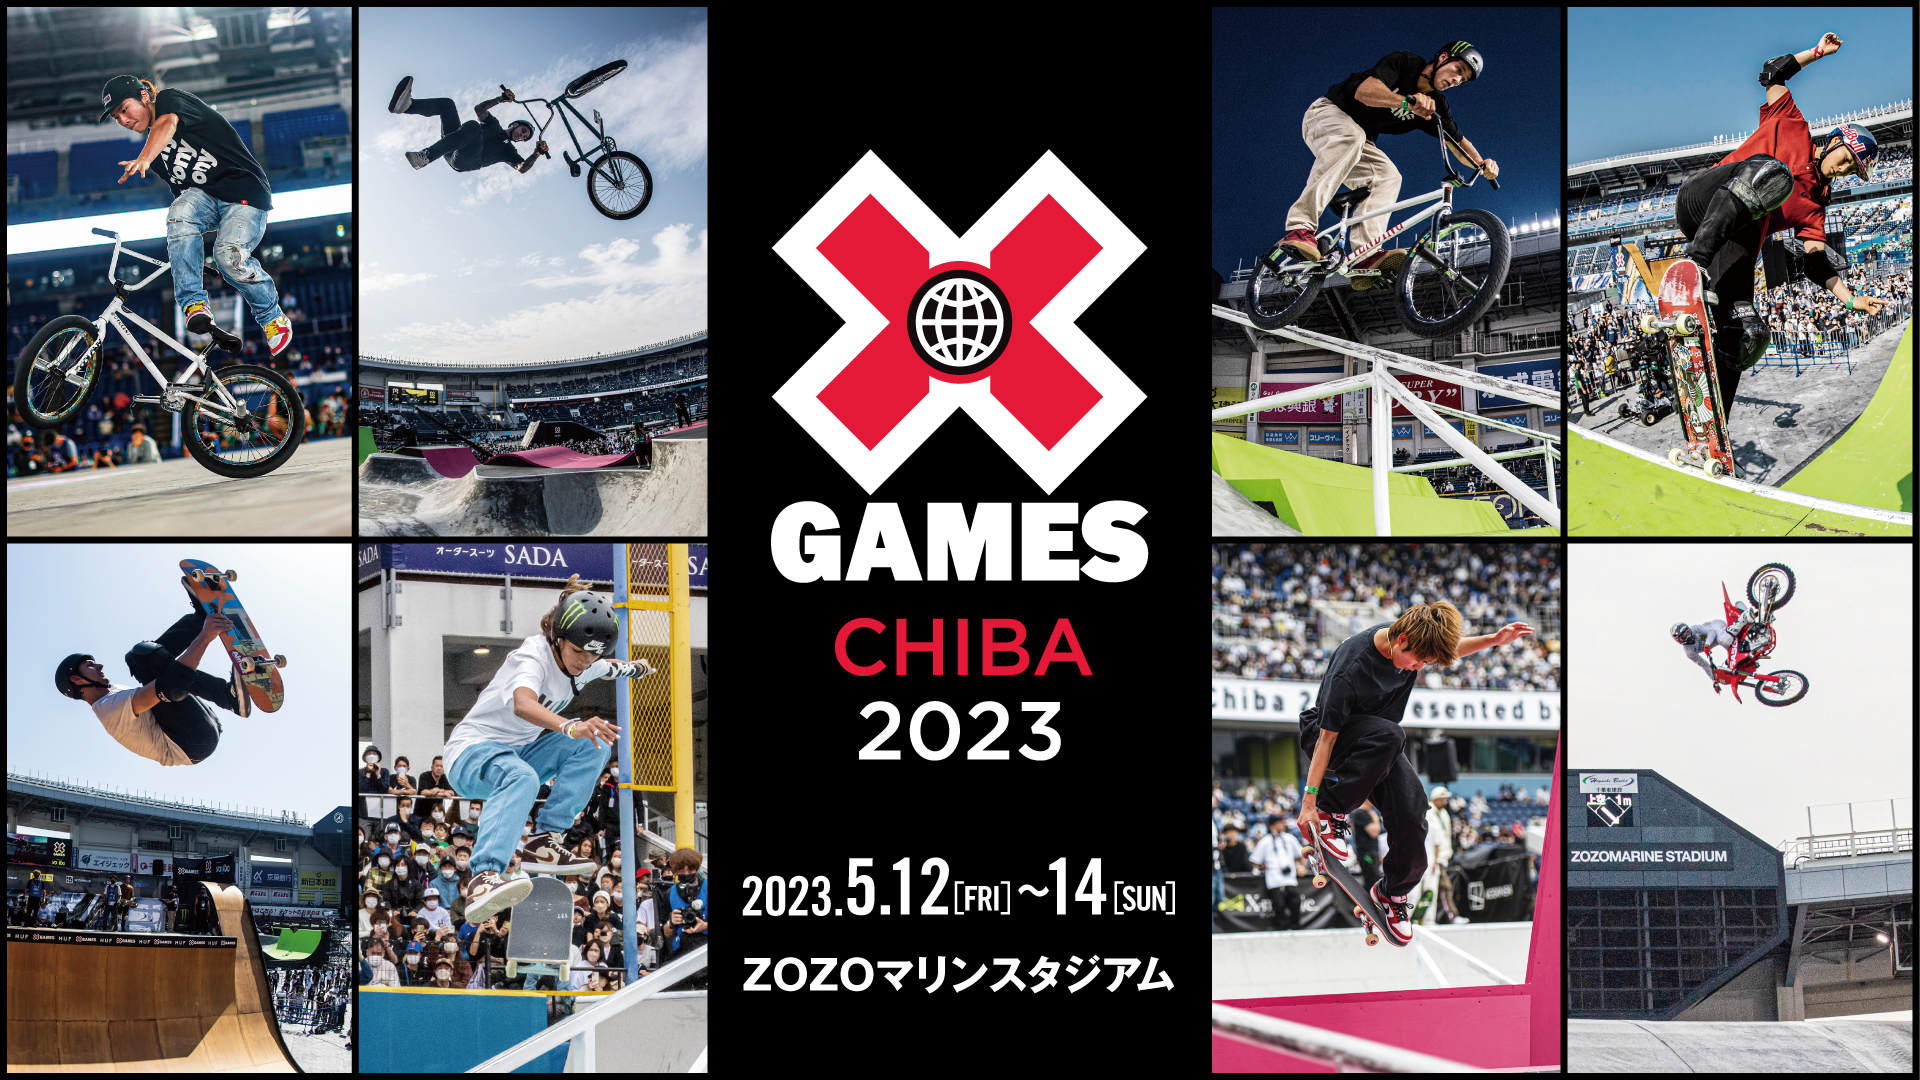 X Games Chiba 2023 オリジナルデッキ - スケートボード